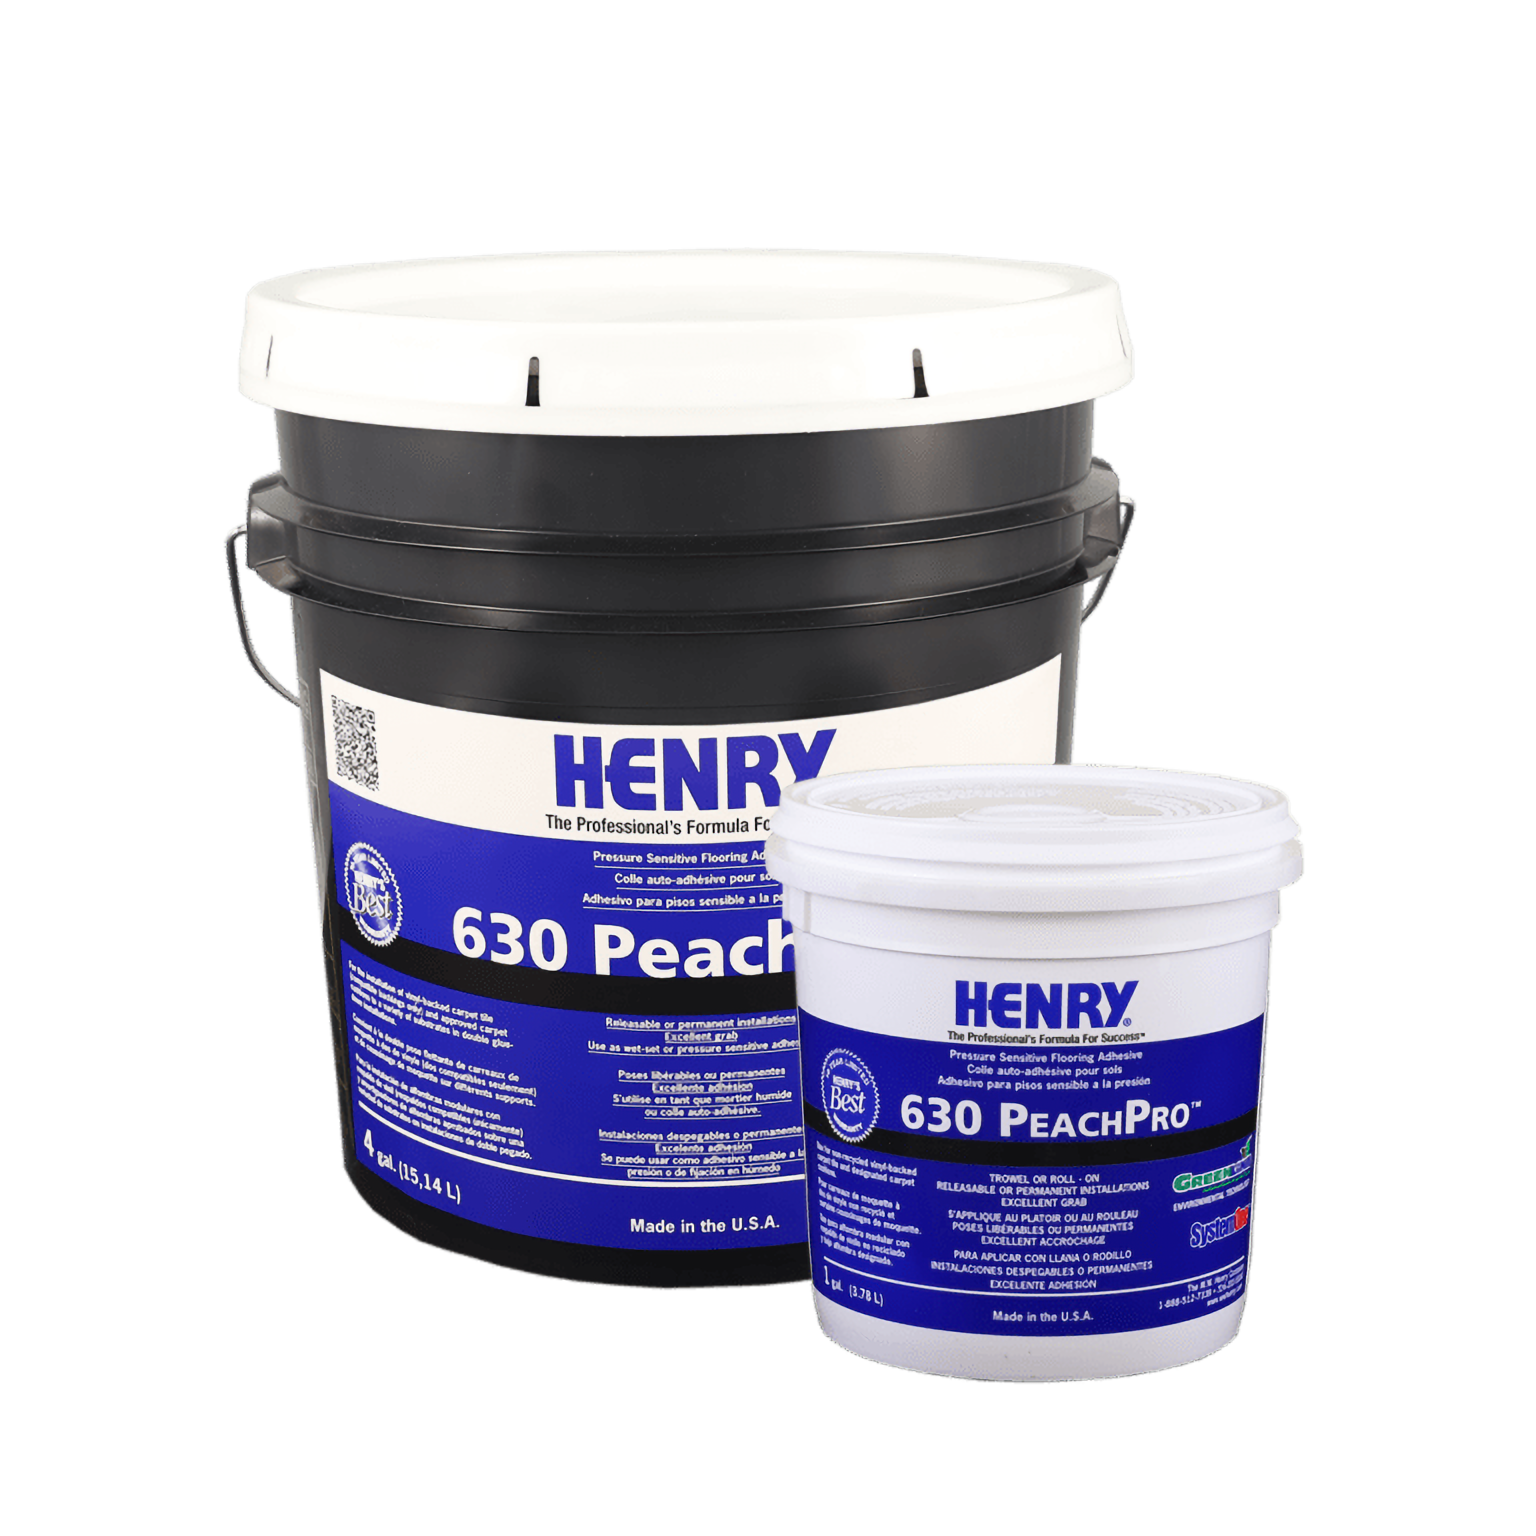 HENRY 630 Peach Pro Adhesive